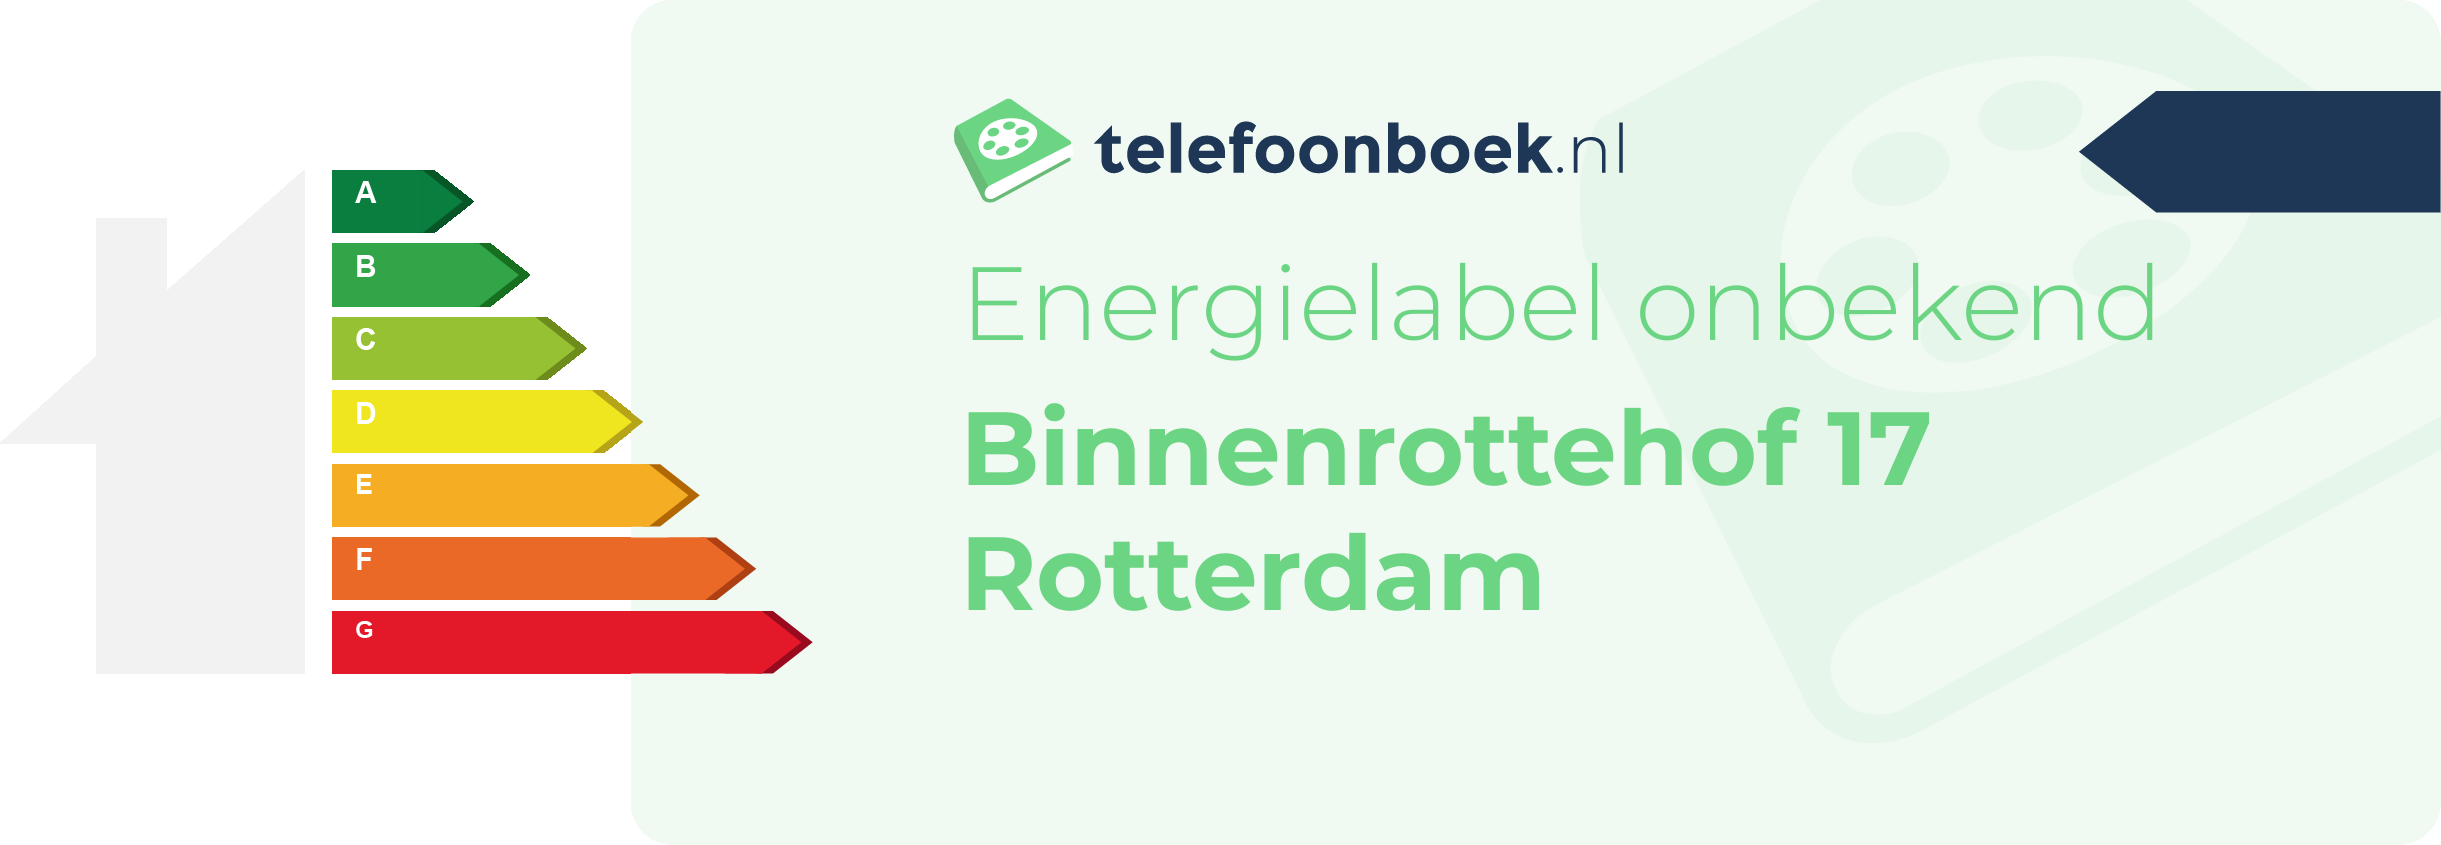 Energielabel Binnenrottehof 17 Rotterdam